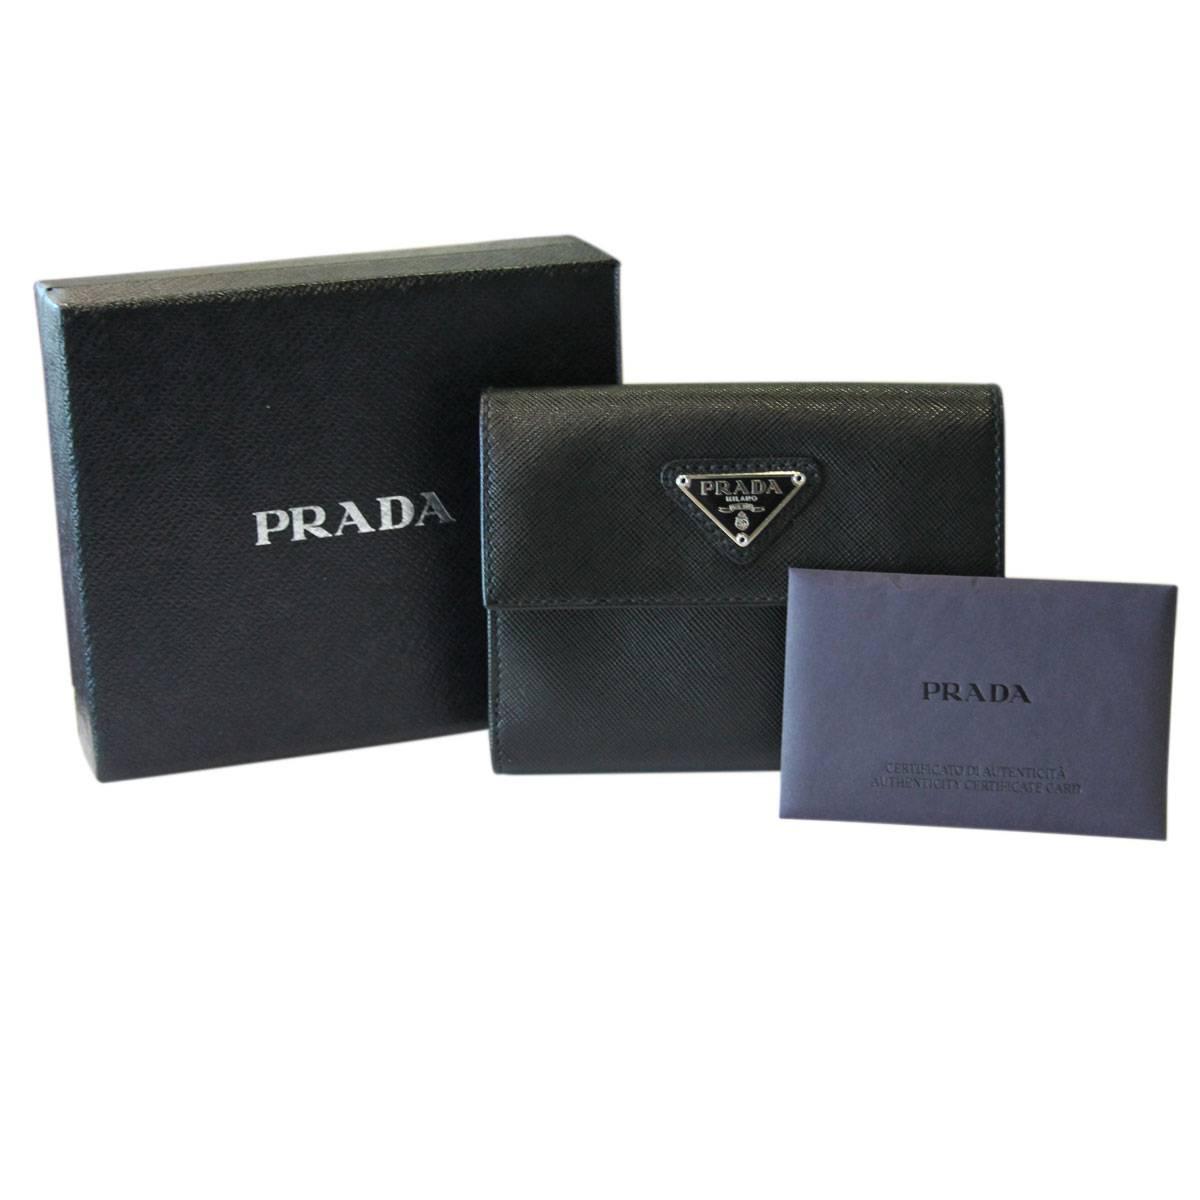 Prada Black Saffiano Leather Bi-Fold Wallet in Box at 1stdibs